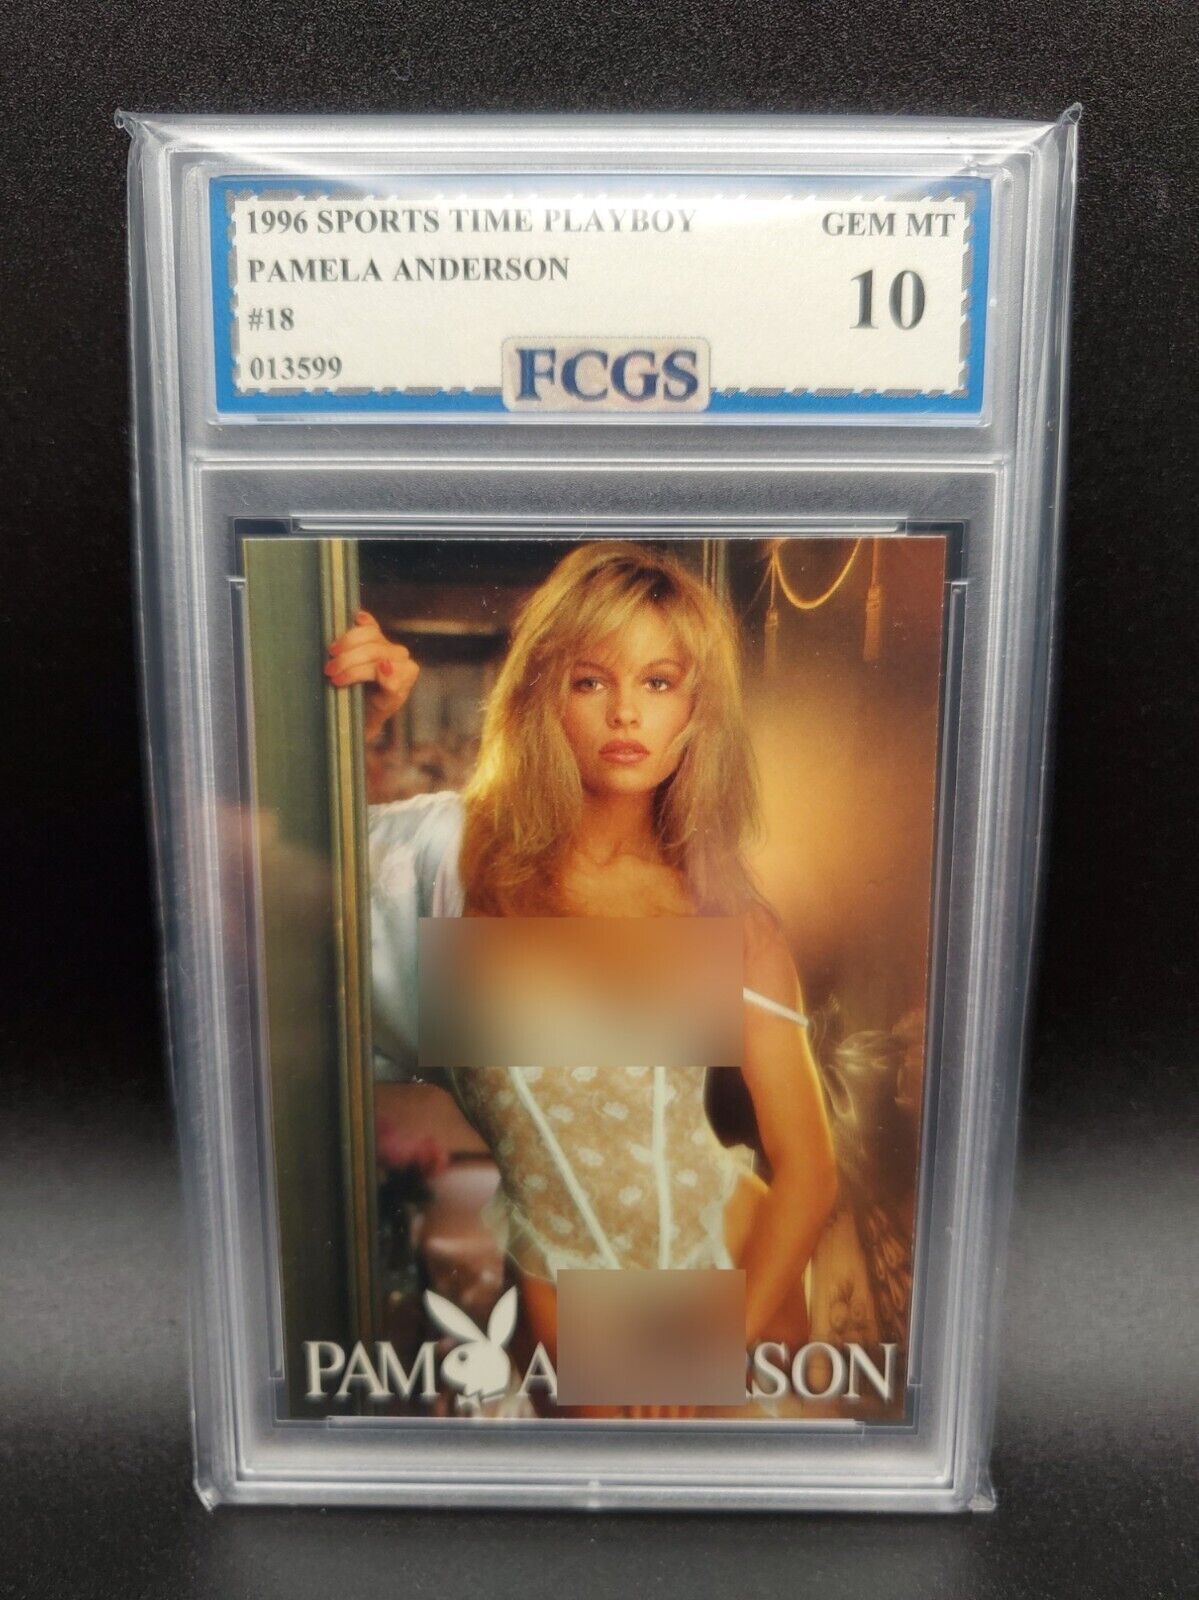 1996 Sports Time Playboy Pamela Anderson #18- Graded 10 [FCGS] GEM-MT